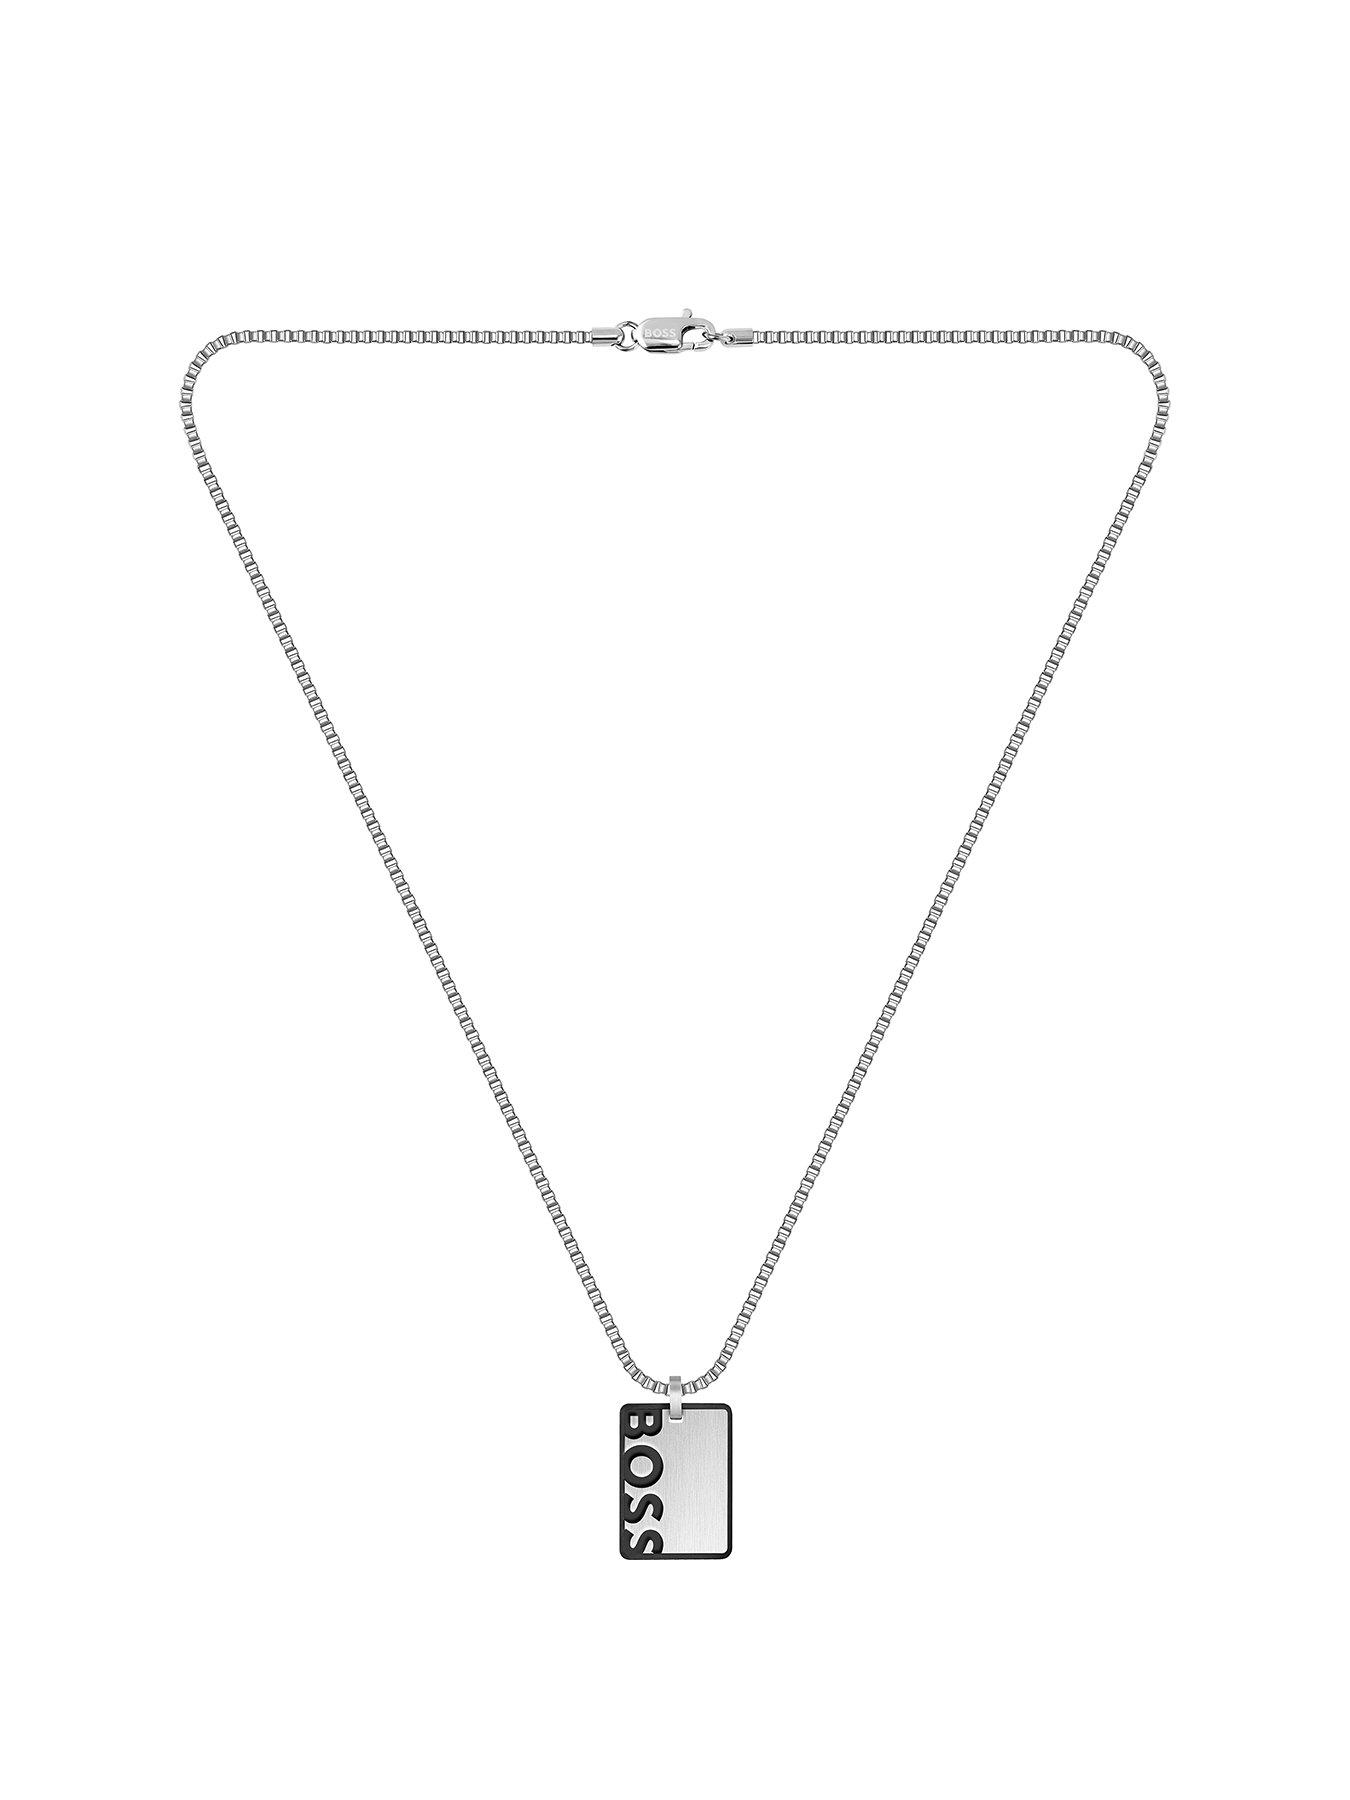 Boss | Movado Company Store | Boss ID Men's Necklace